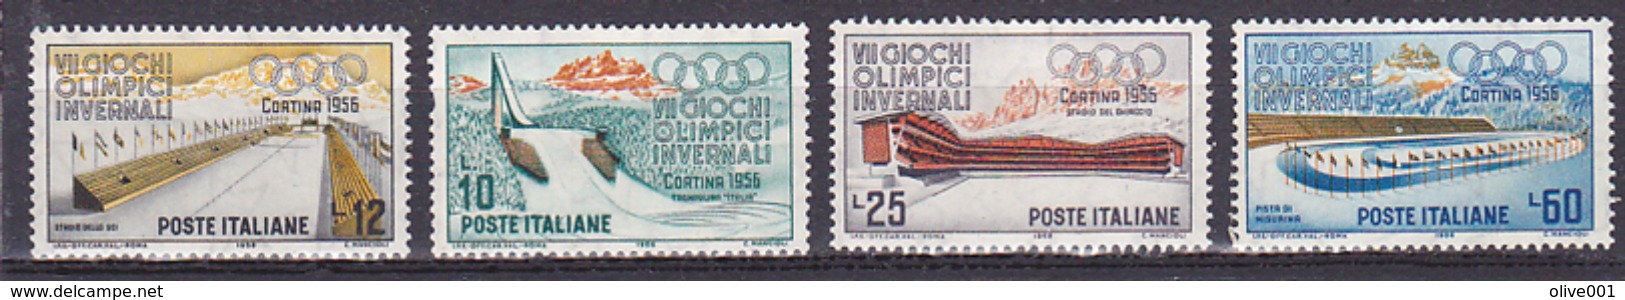 Italie Serie De 4 TP Y&T N° 720 / 23 MNH ** Cote 5 € - Hiver 1956: Cortina D'Ampezzo